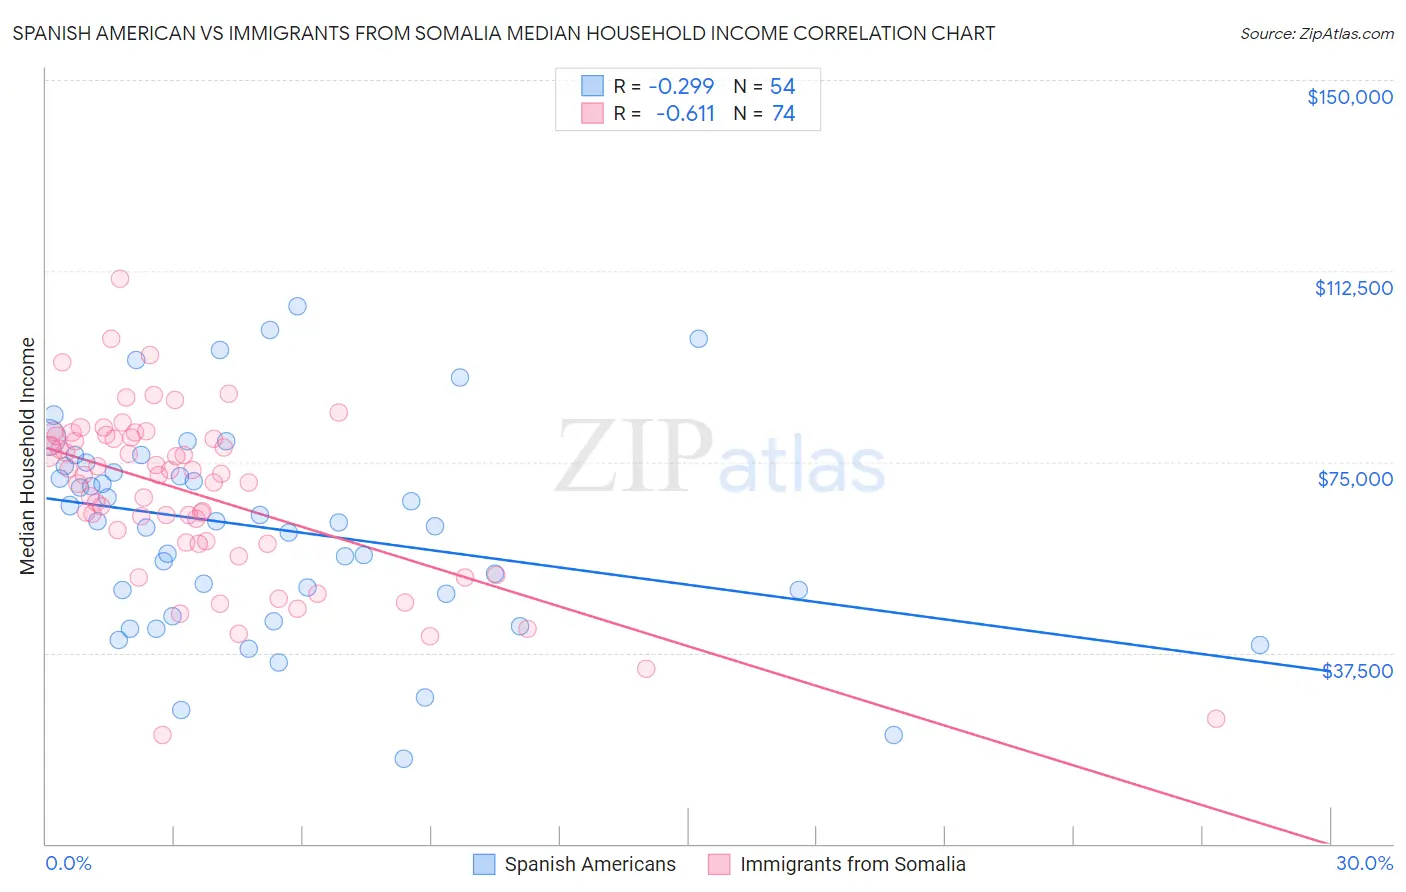 Spanish American vs Immigrants from Somalia Median Household Income